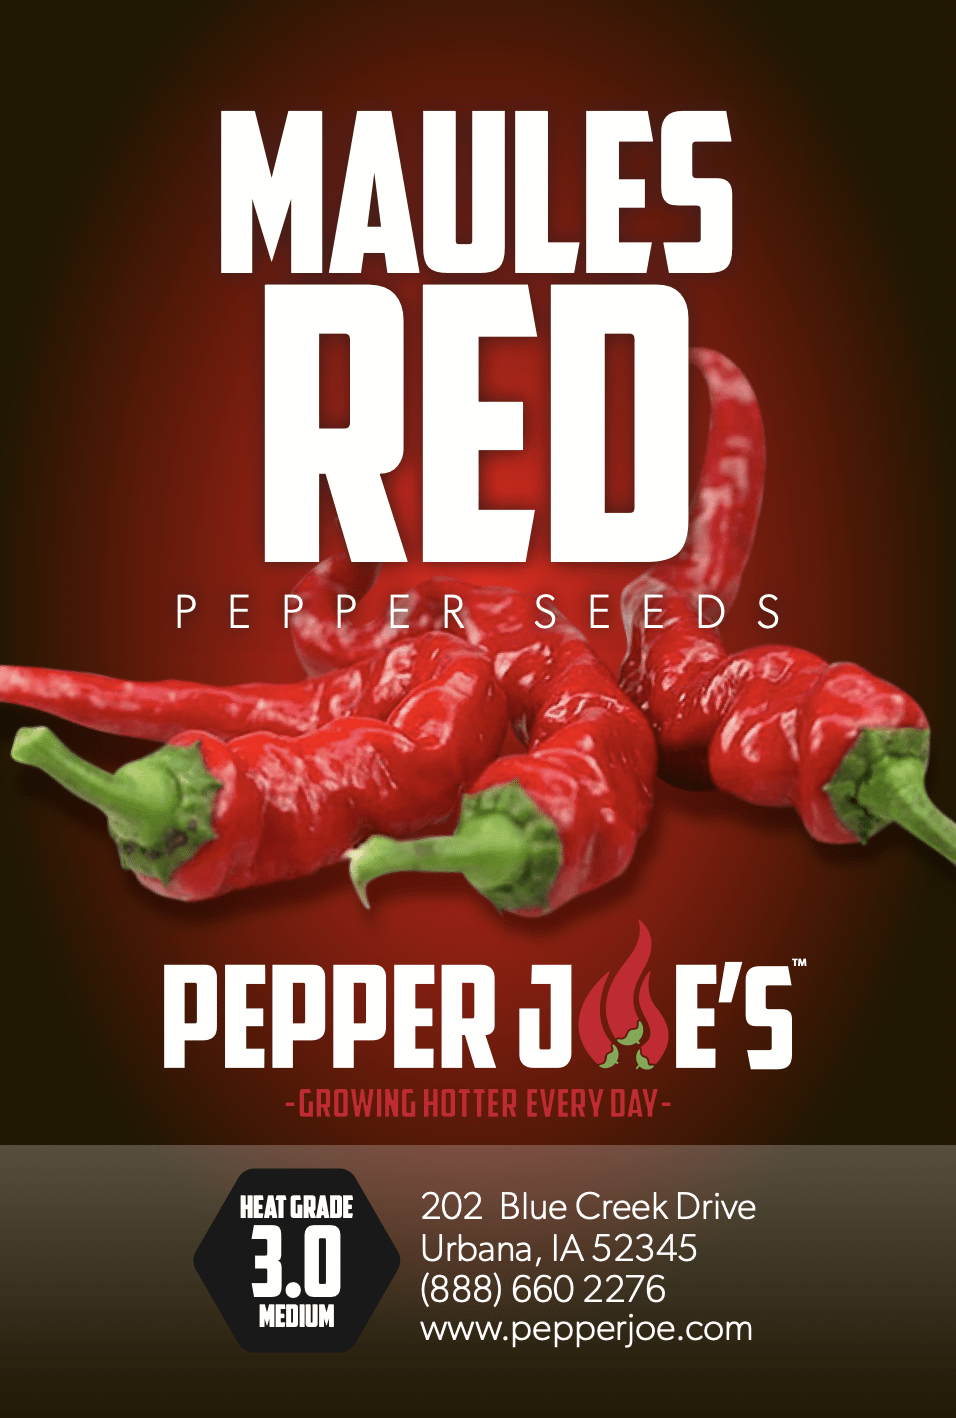 Pepper Joe's Maules Red pepper seeds - seed label